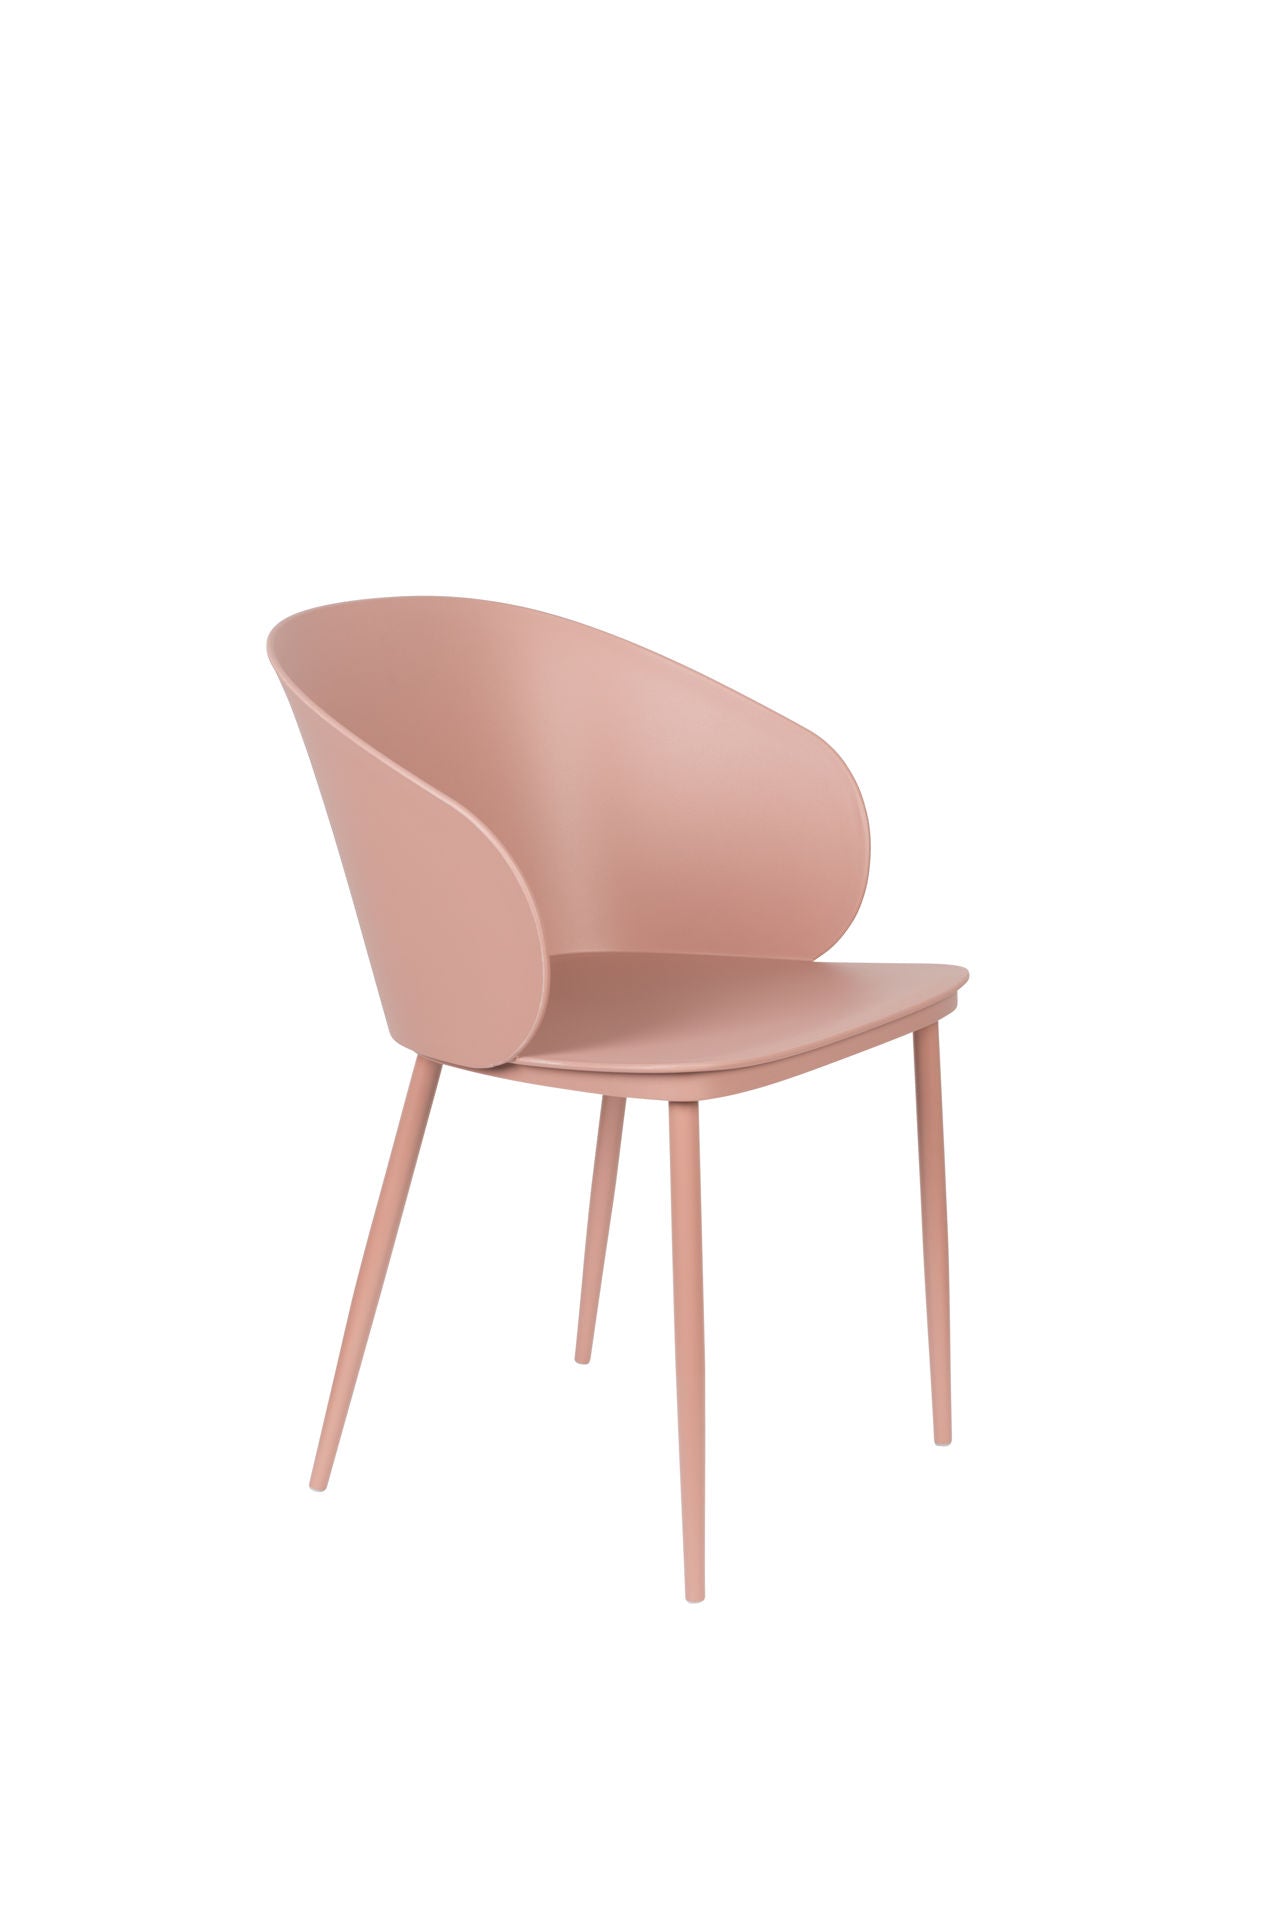 Nancy's Fern Park Chair - Scandinave - Rose - Polypropylène, Acier - 53 cm x 57 cm x 81 cm